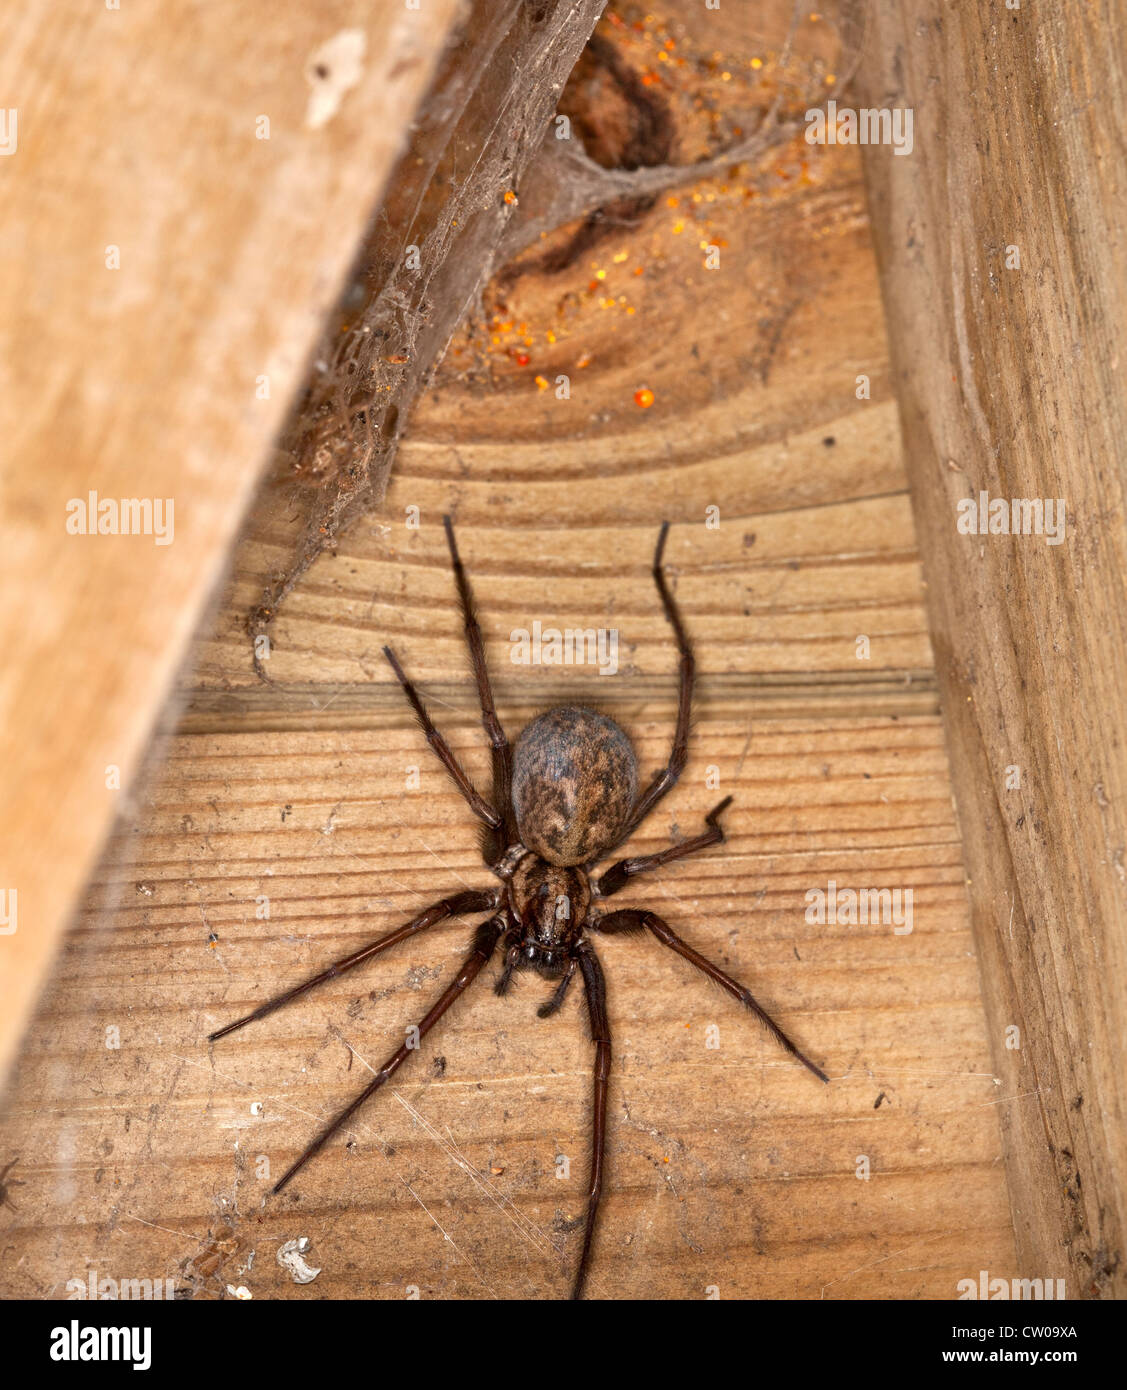 Tegenaria gigantea Spider Stock Photo